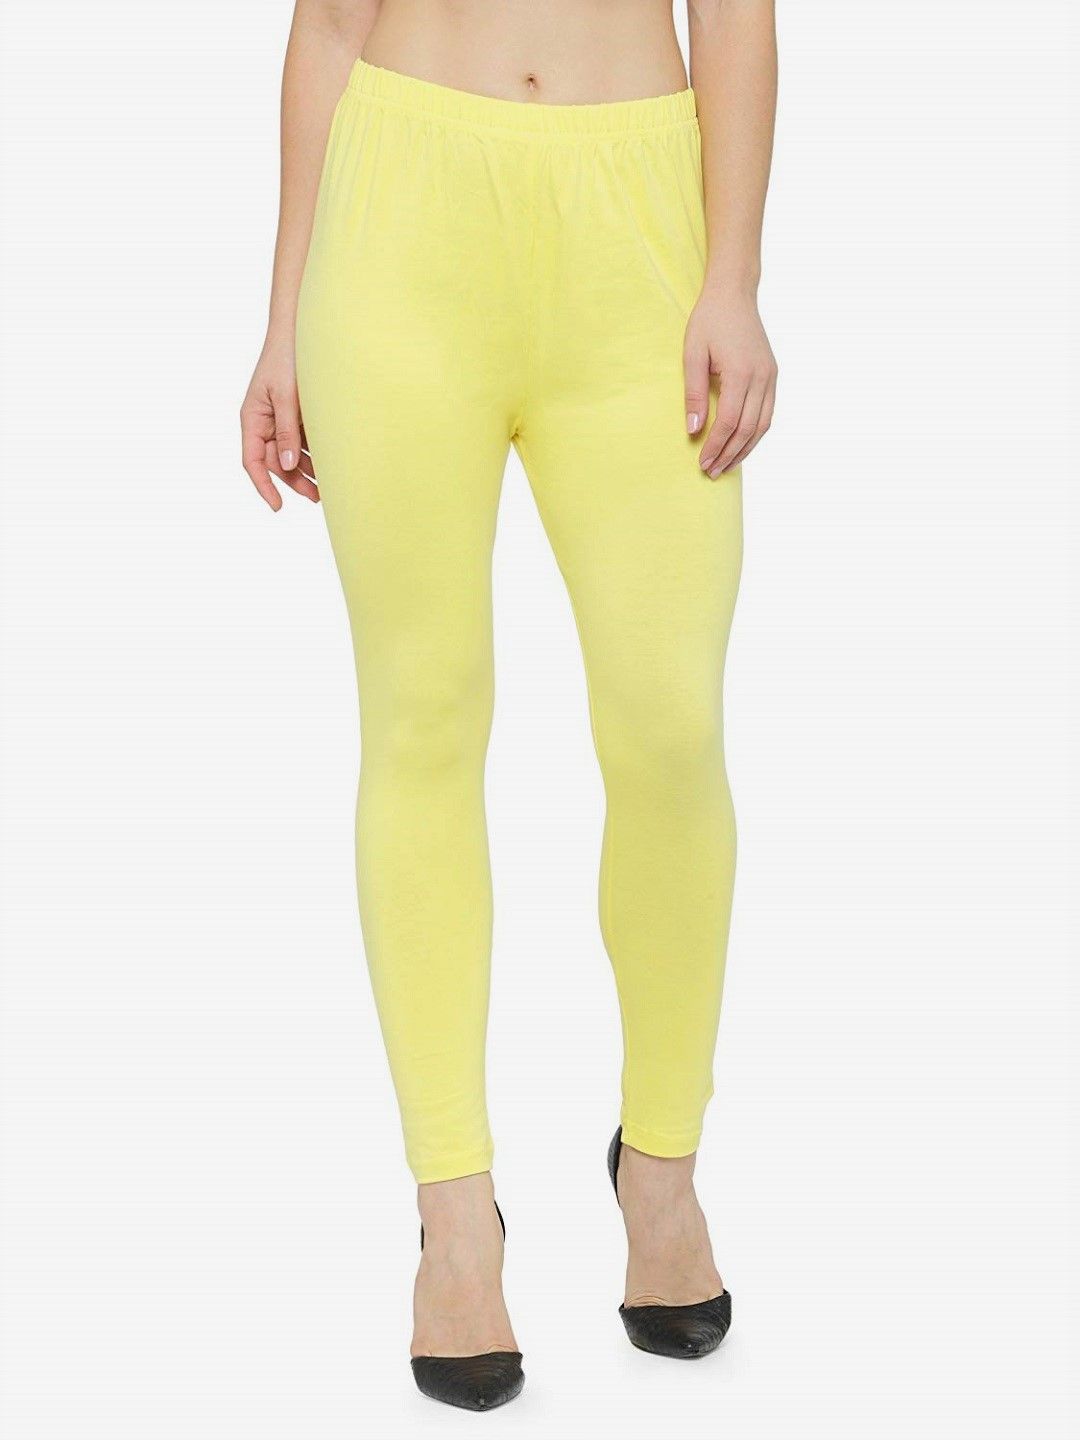 N-Gal 4 Way Luxury Cotton Lycra Women's Ankle Length Leggings, Lemon Yellow  (S)